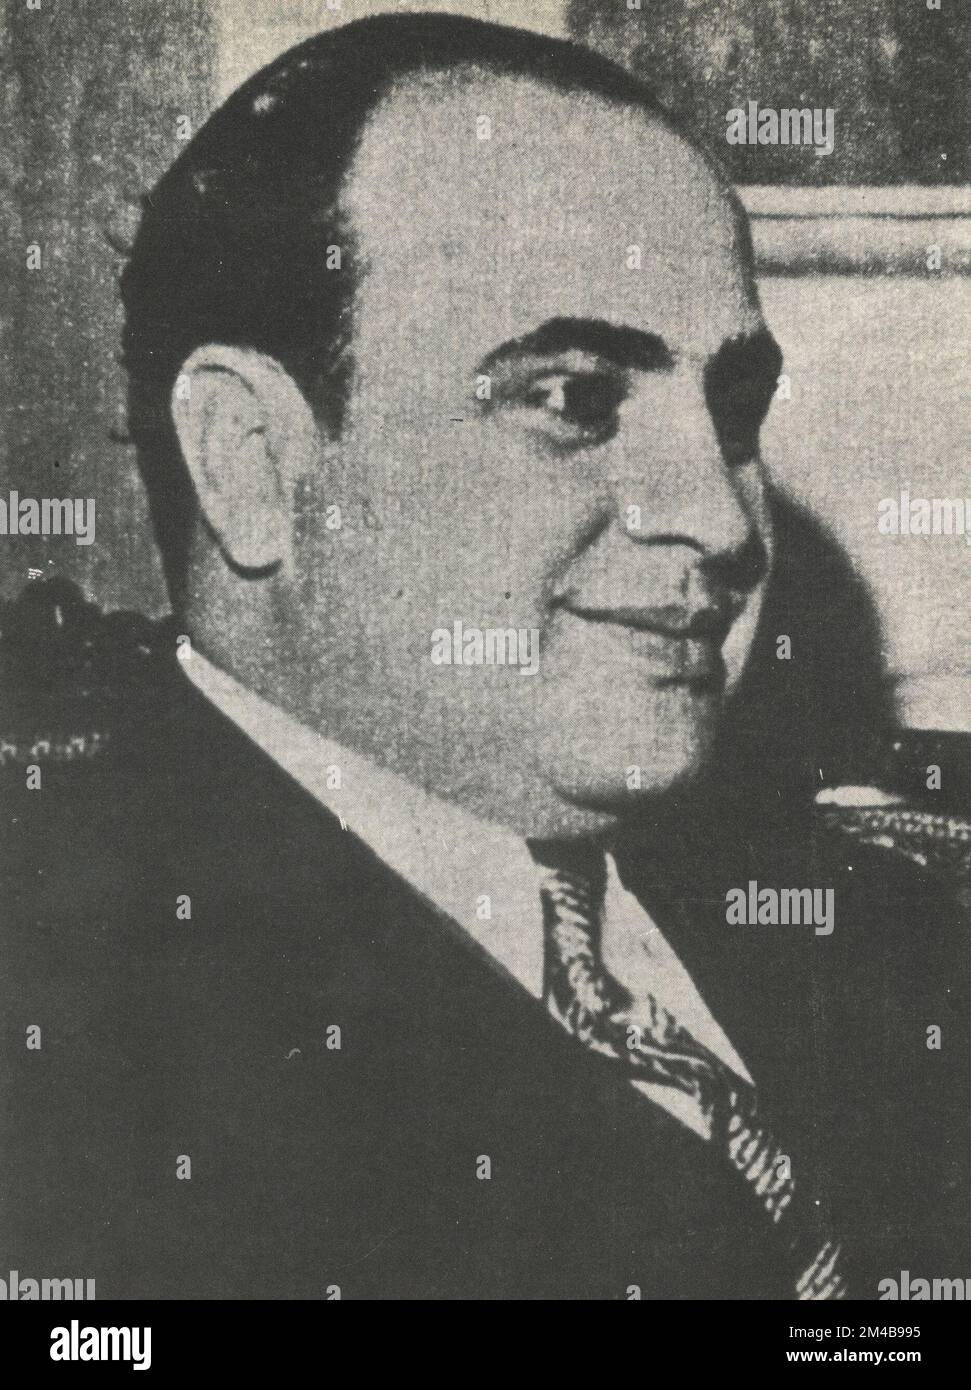 Portrait of American gangster Al Capone, USA 1930s Stock Photo - Alamy